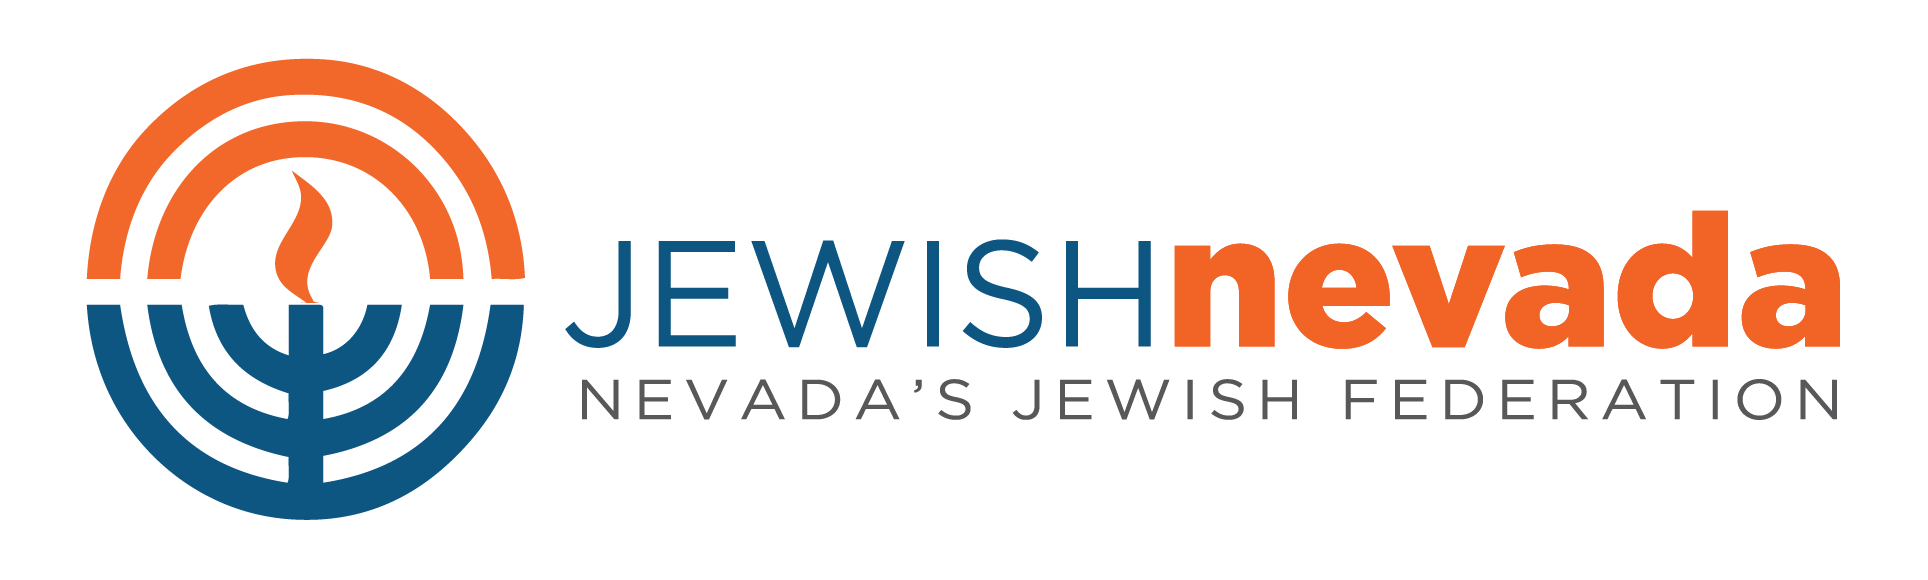 JEWISHnevada - logo